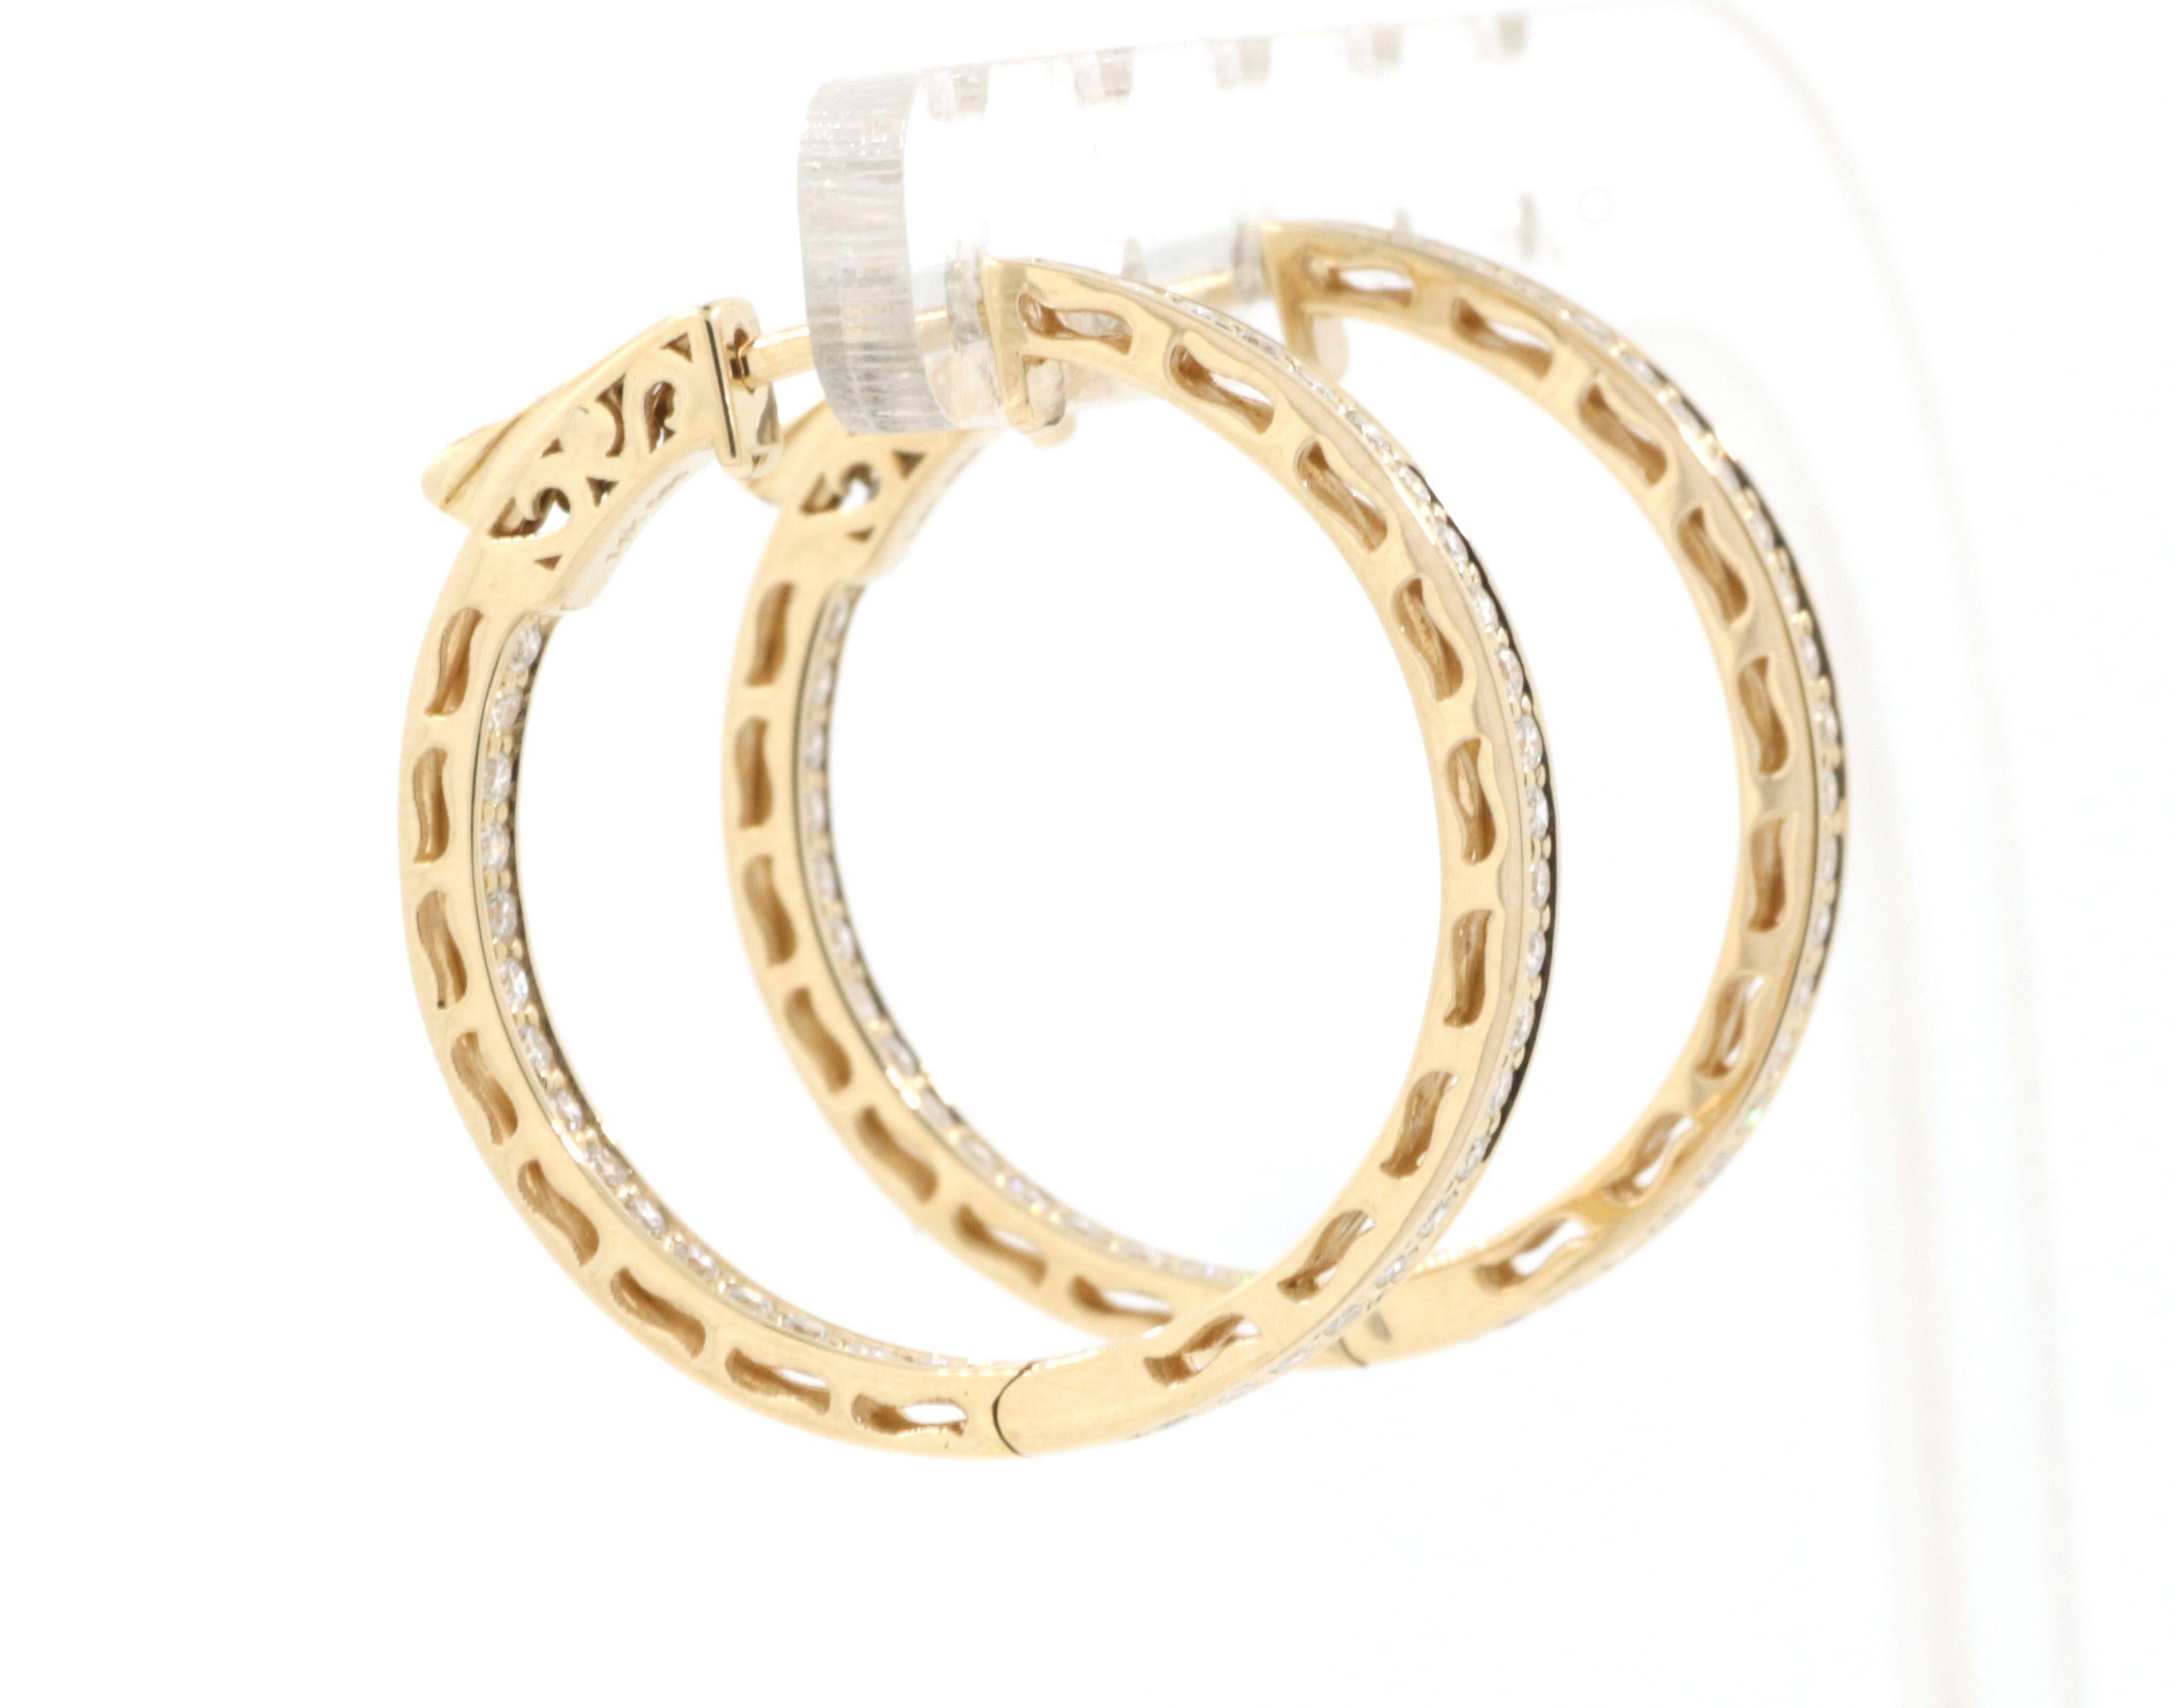 Round Cut 0.75 Carat Diamond Hoop Earrings in 14 Karat Yellow Gold